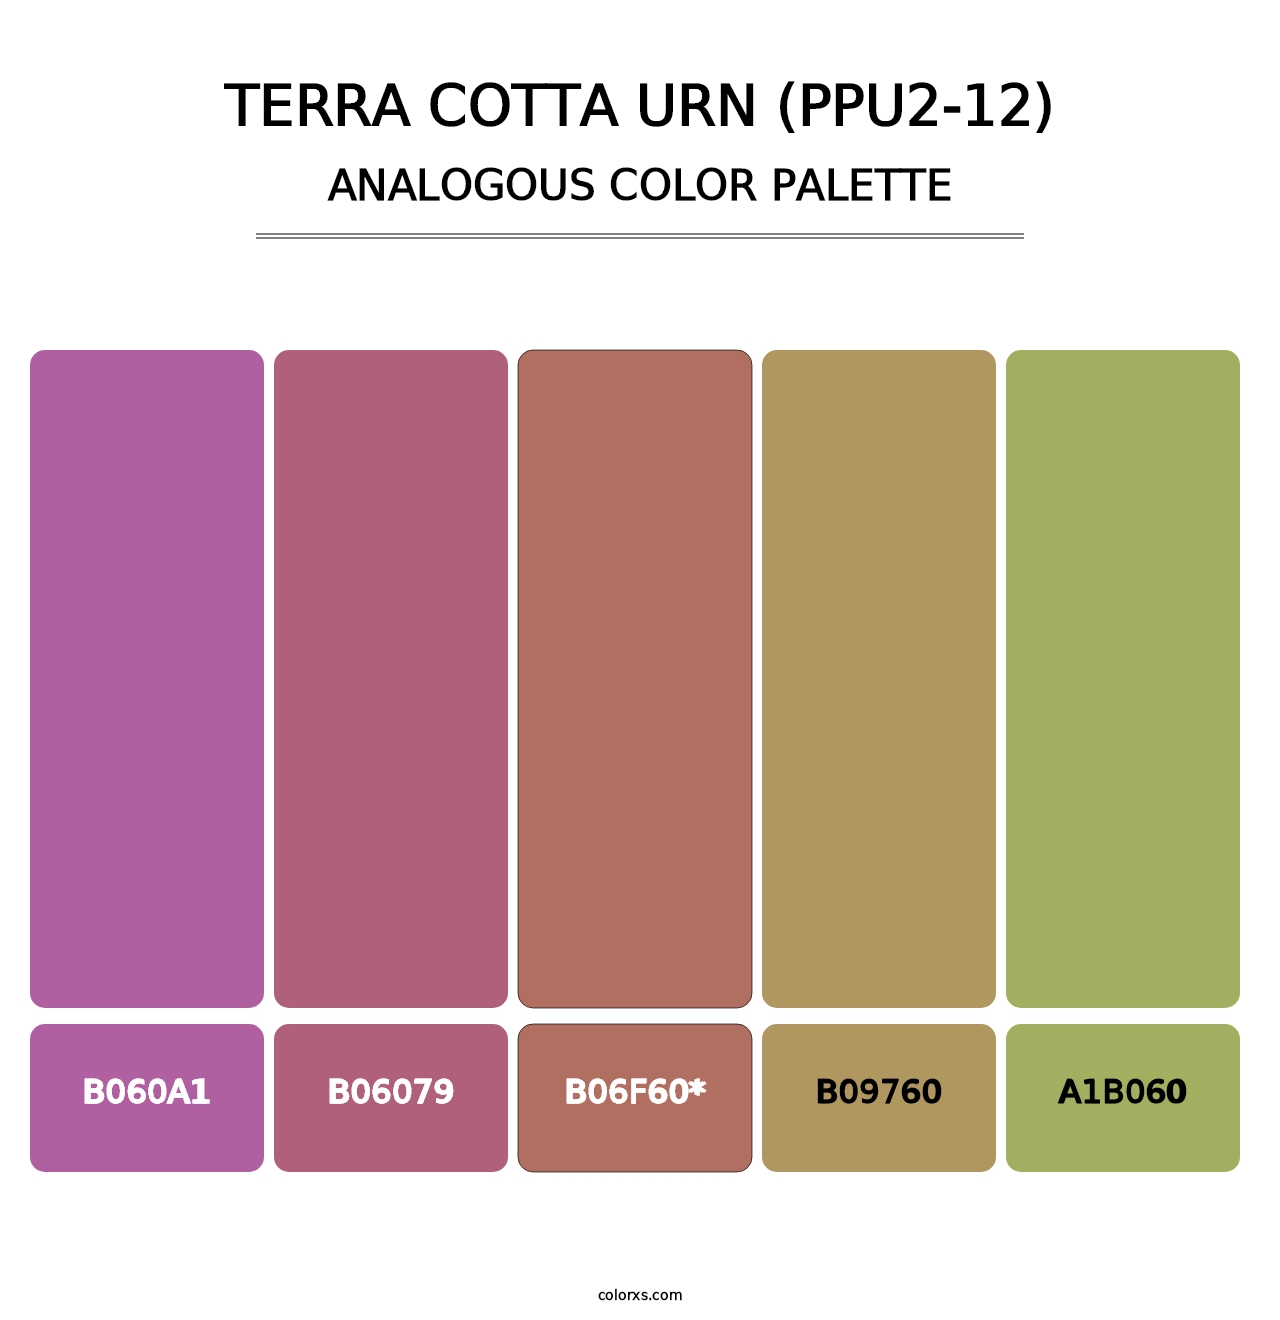 Terra Cotta Urn (PPU2-12) - Analogous Color Palette